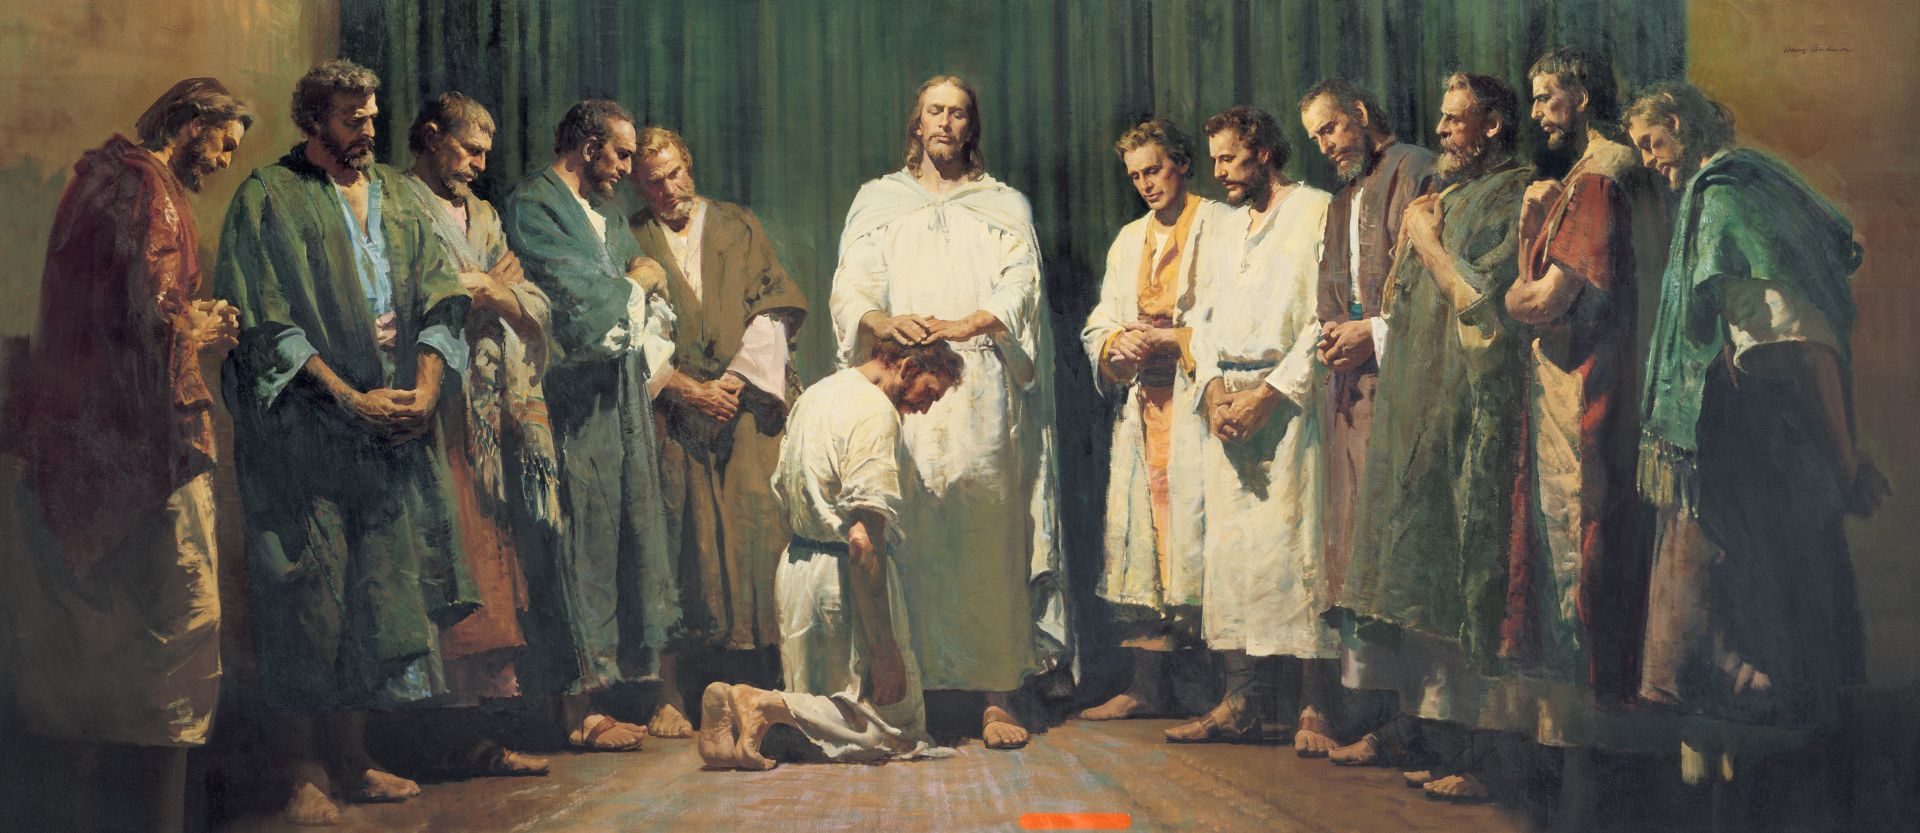 12 disciples of jesus